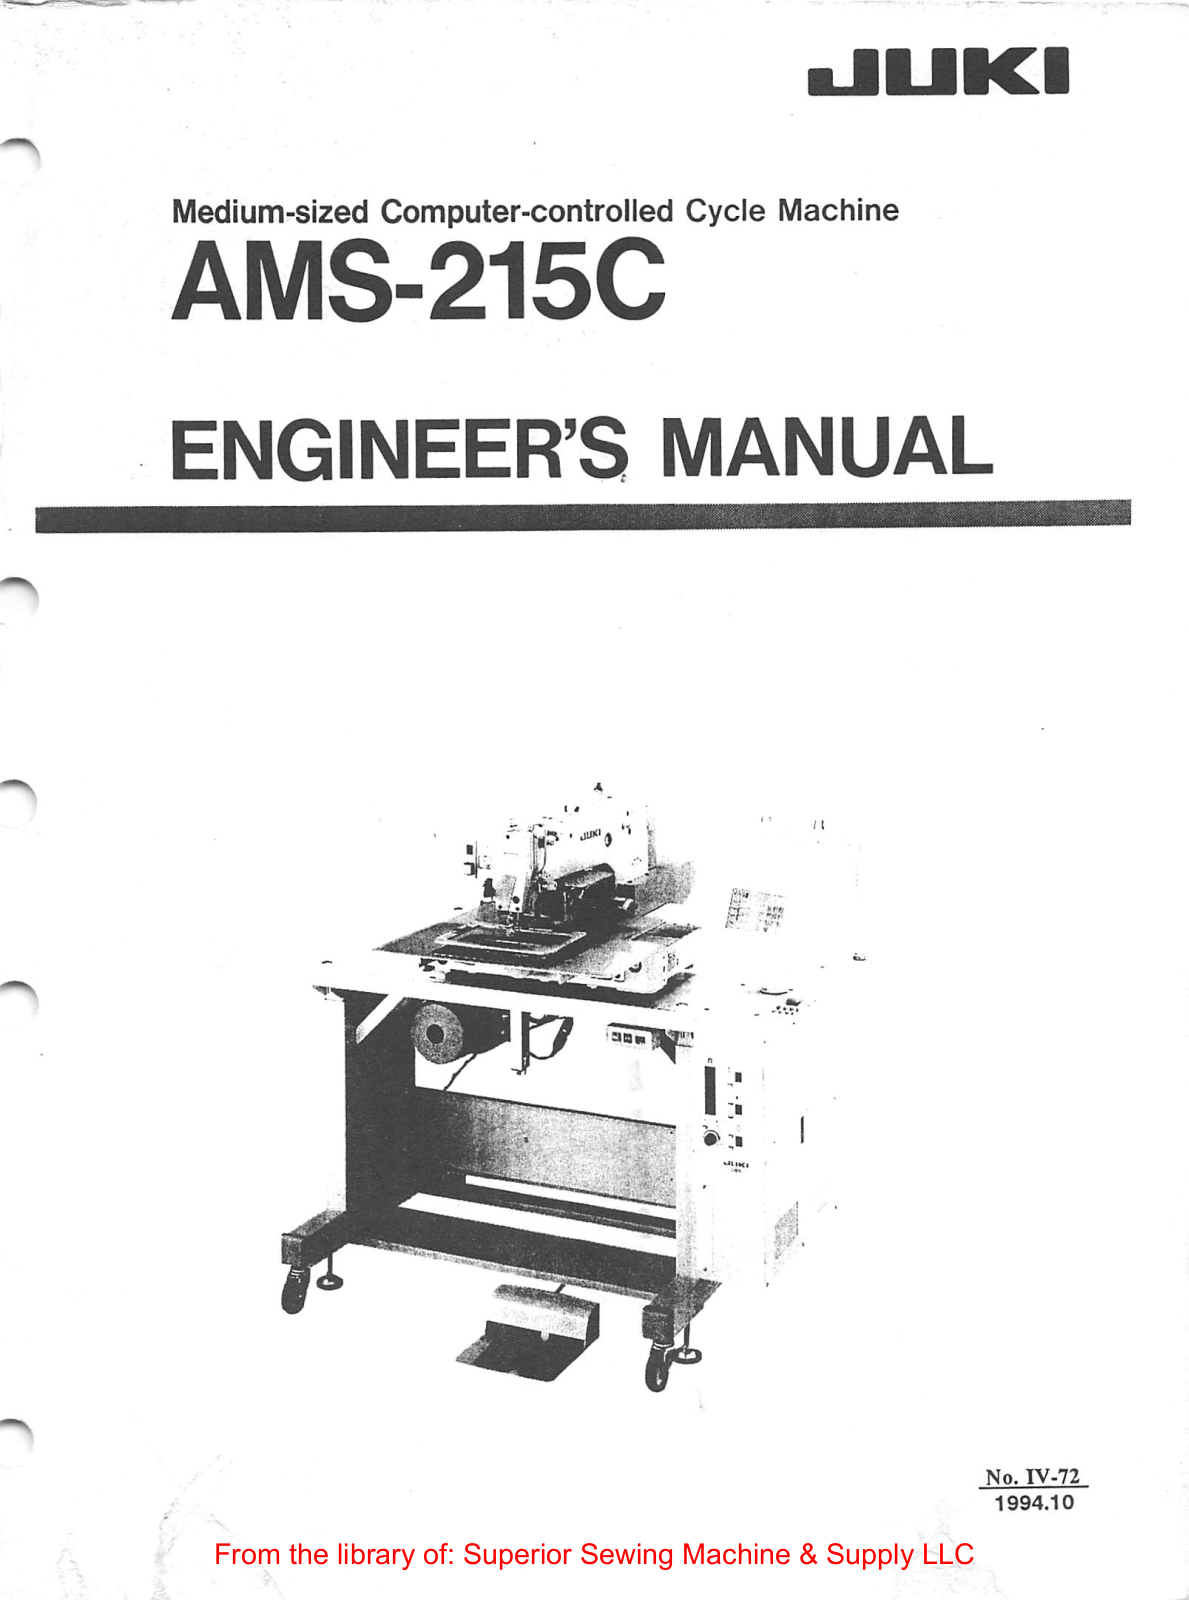 Juki AMS-215C Manual